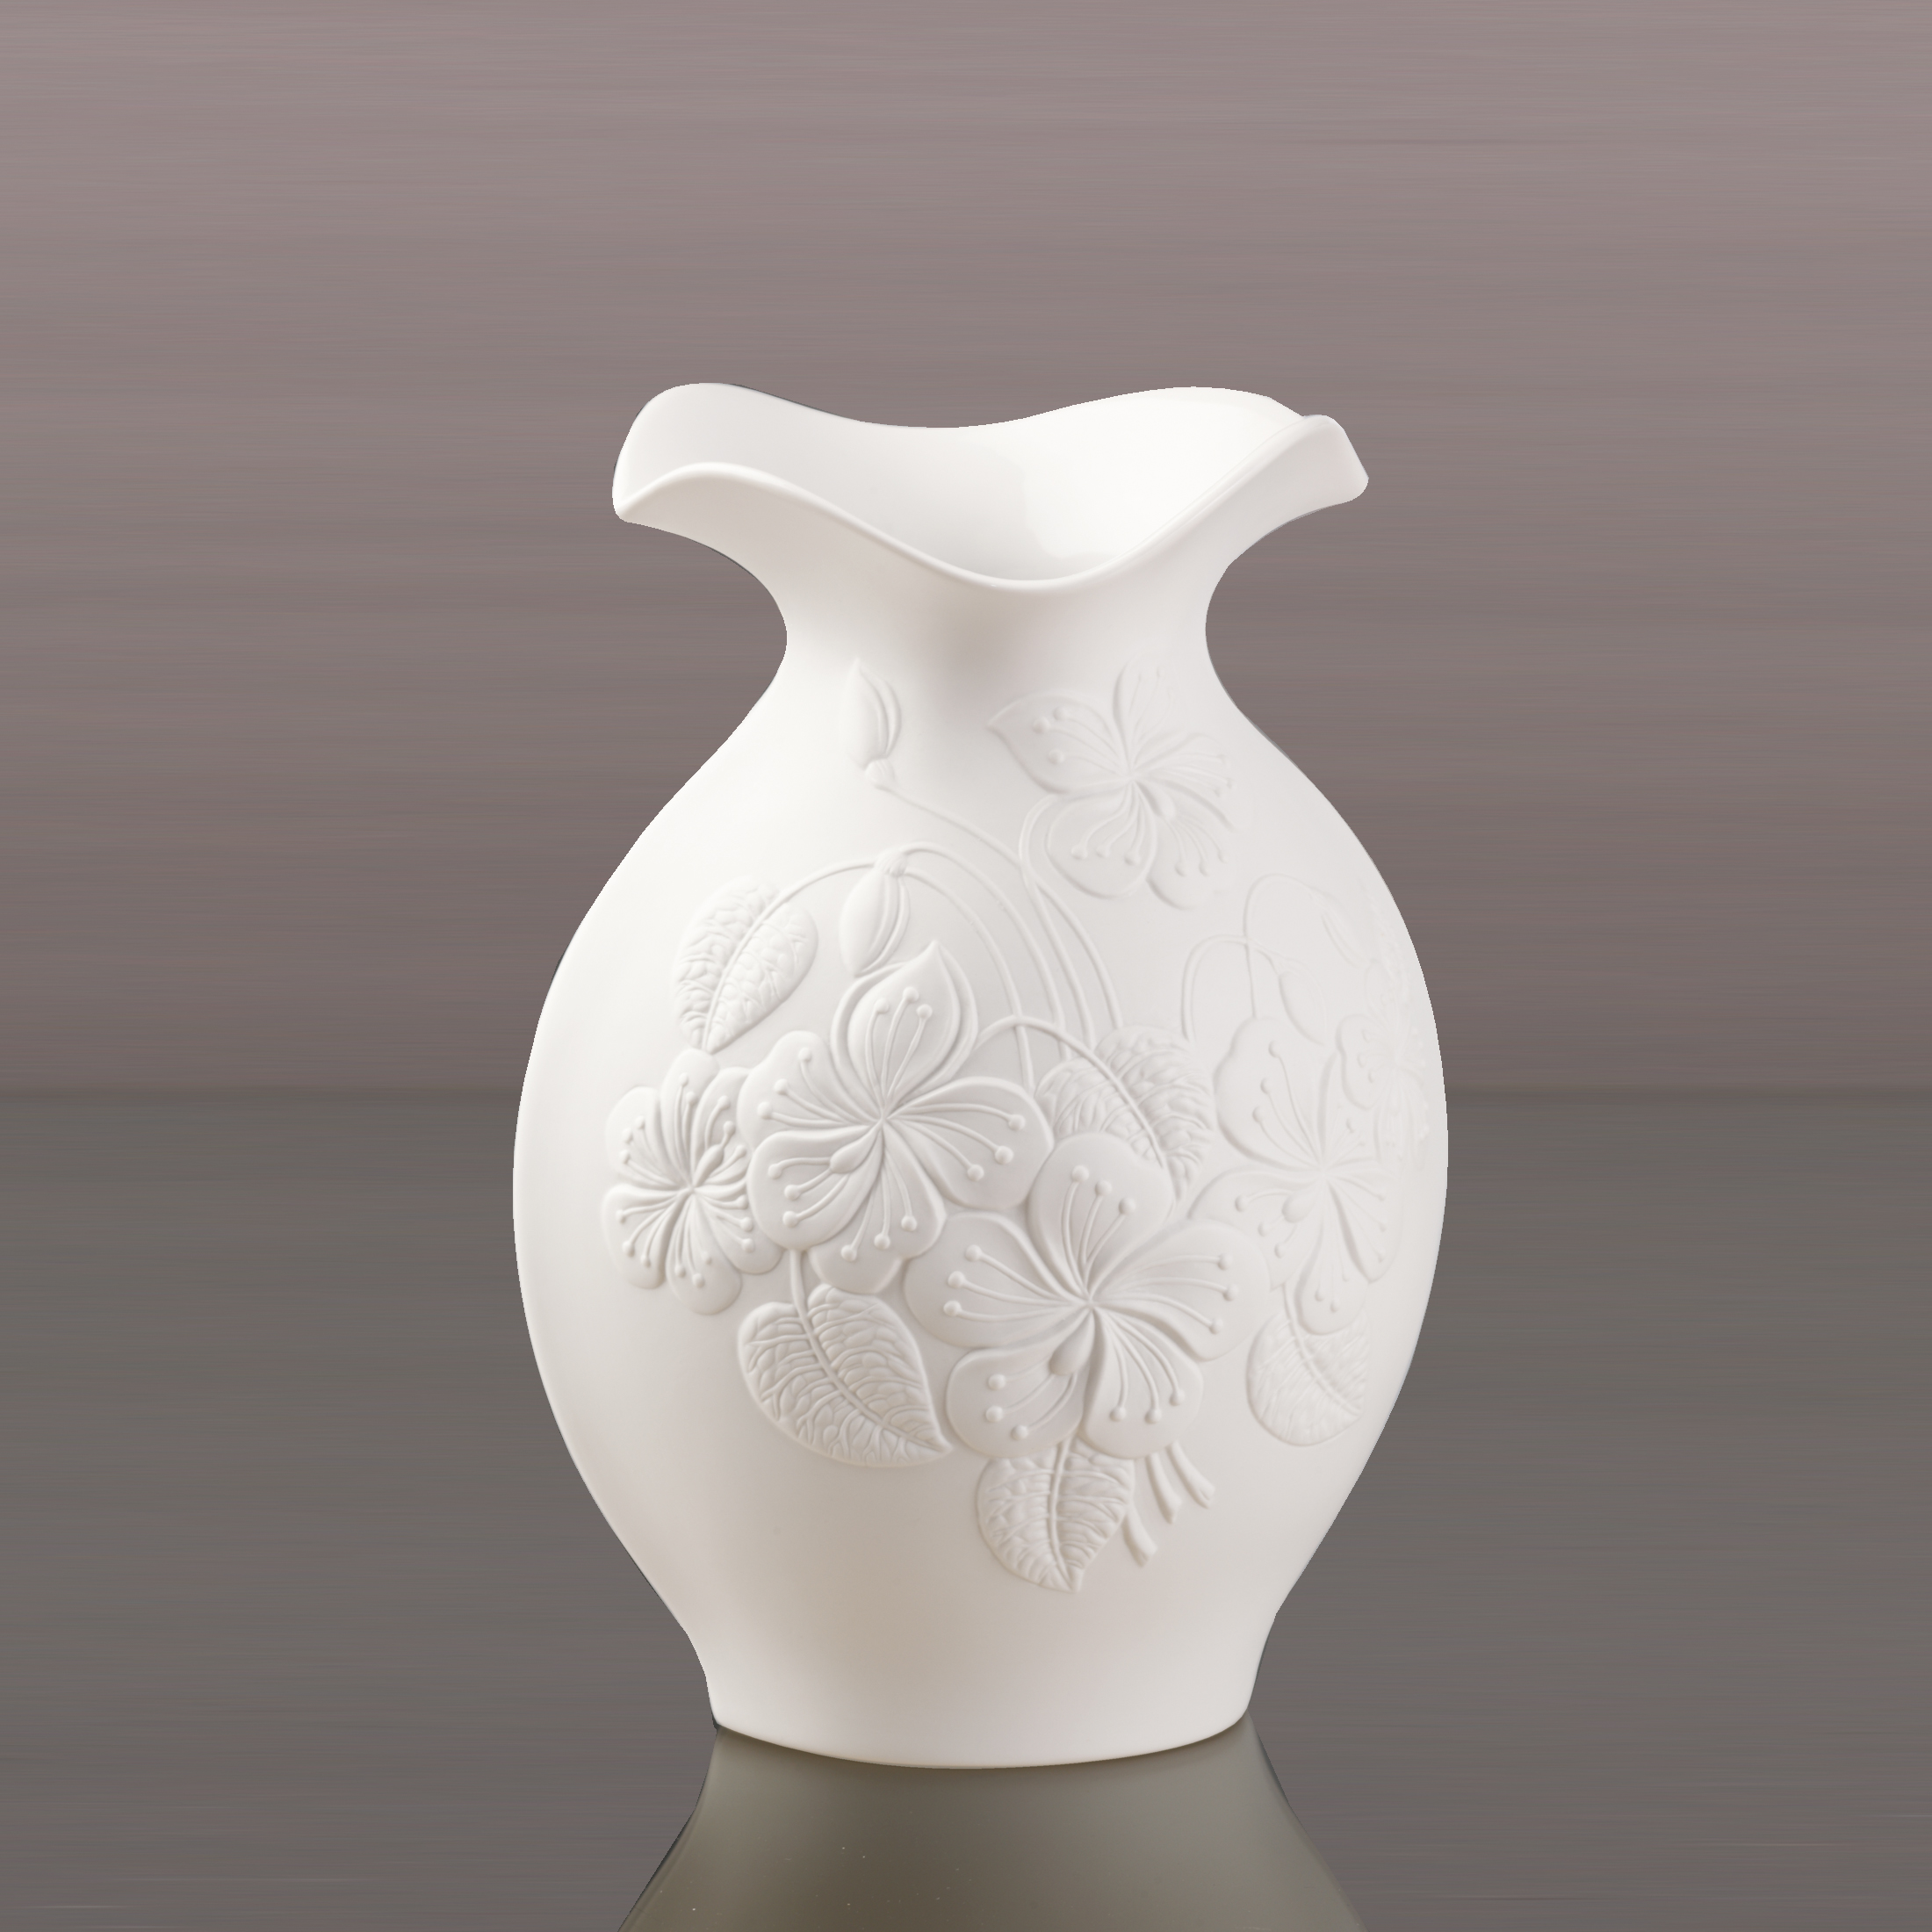 Dekoralia.de - Goebel Vase Floralie 25 cm Porzellan Kaiser